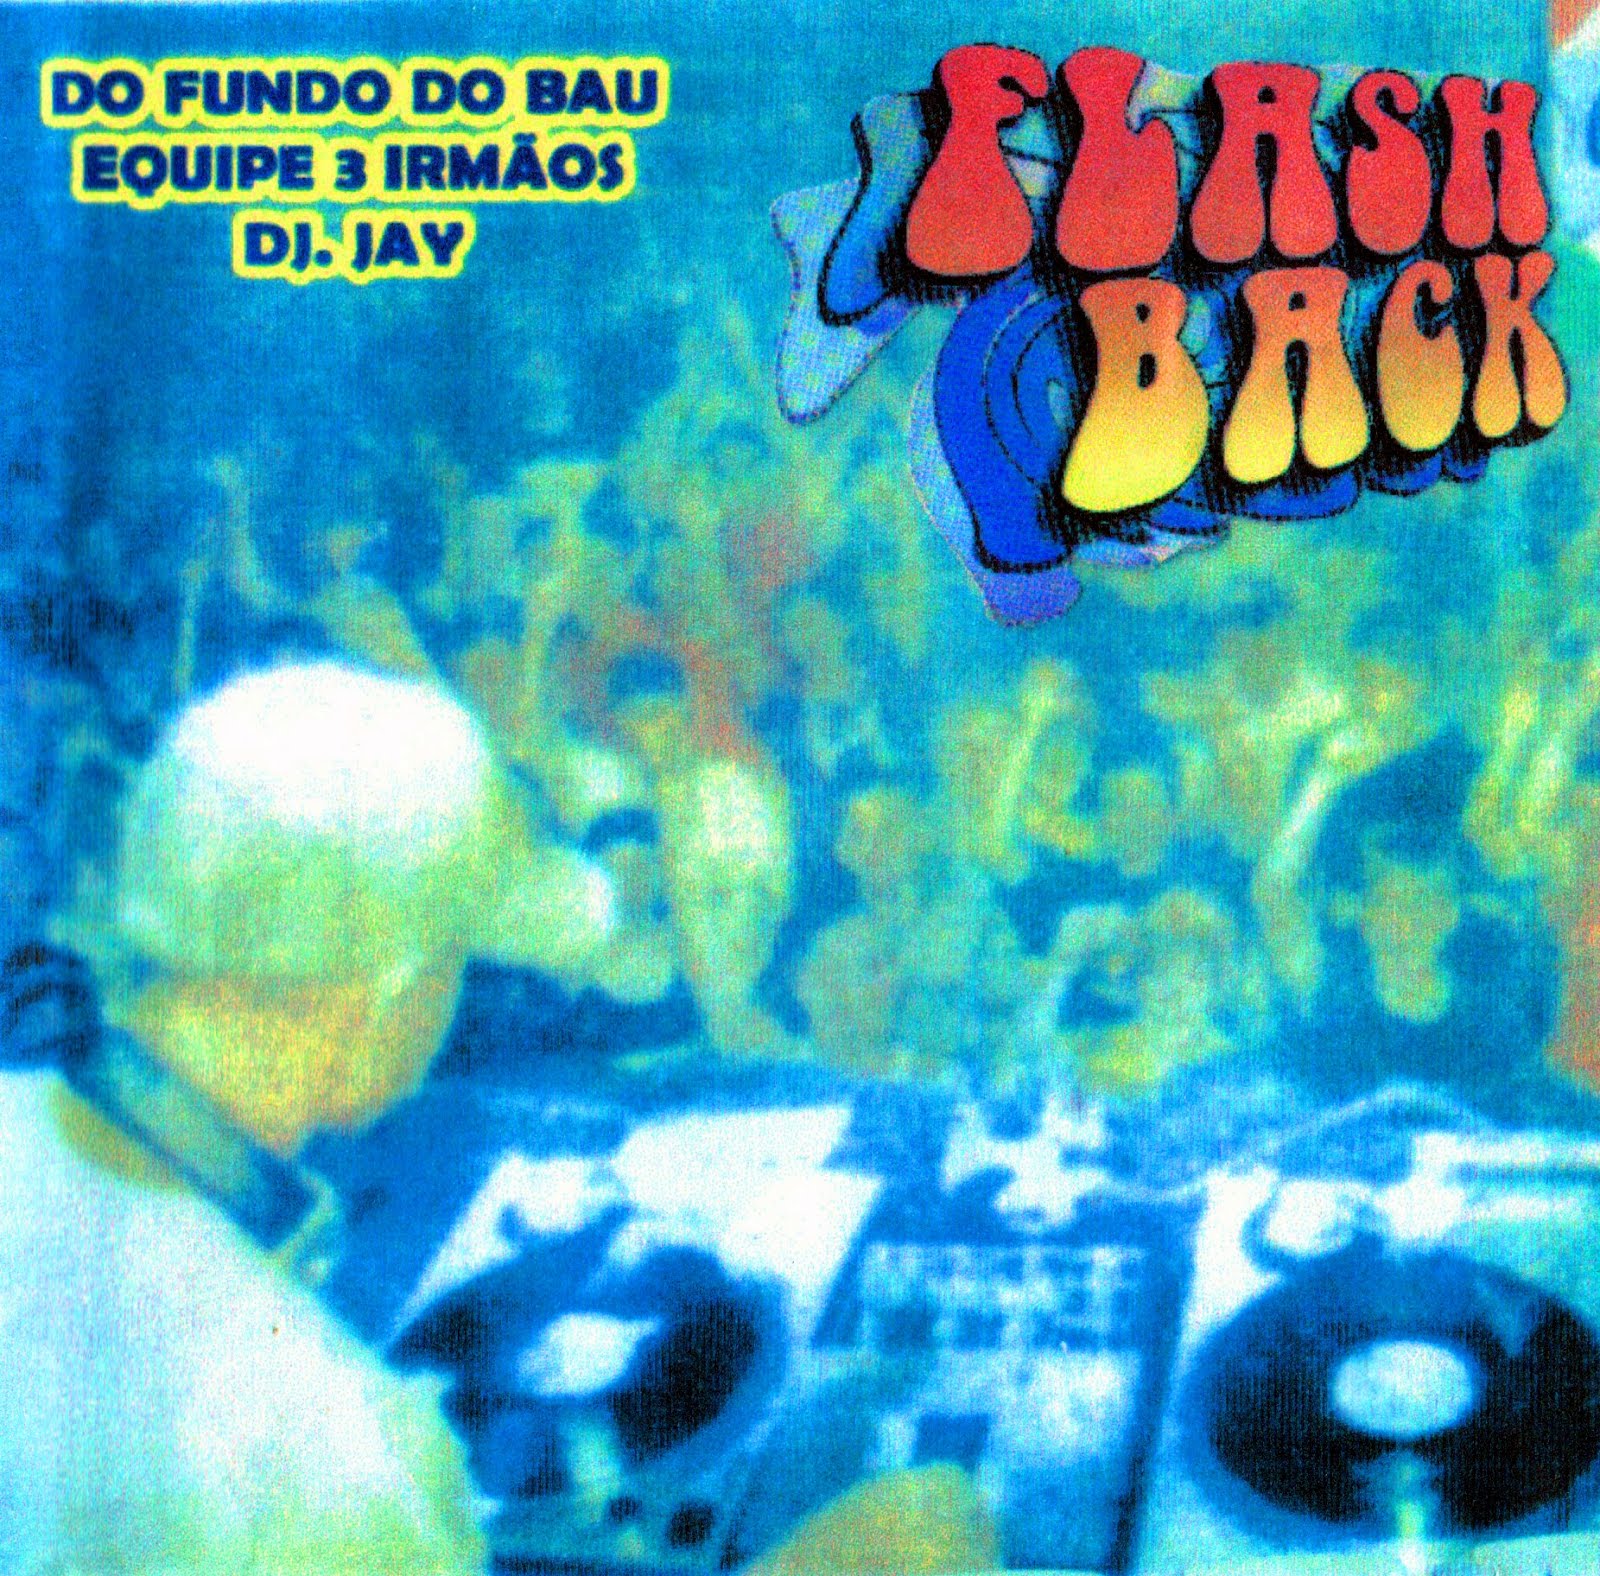 FLASH BLACK DO FUNDO DO BAU DJ .JAY